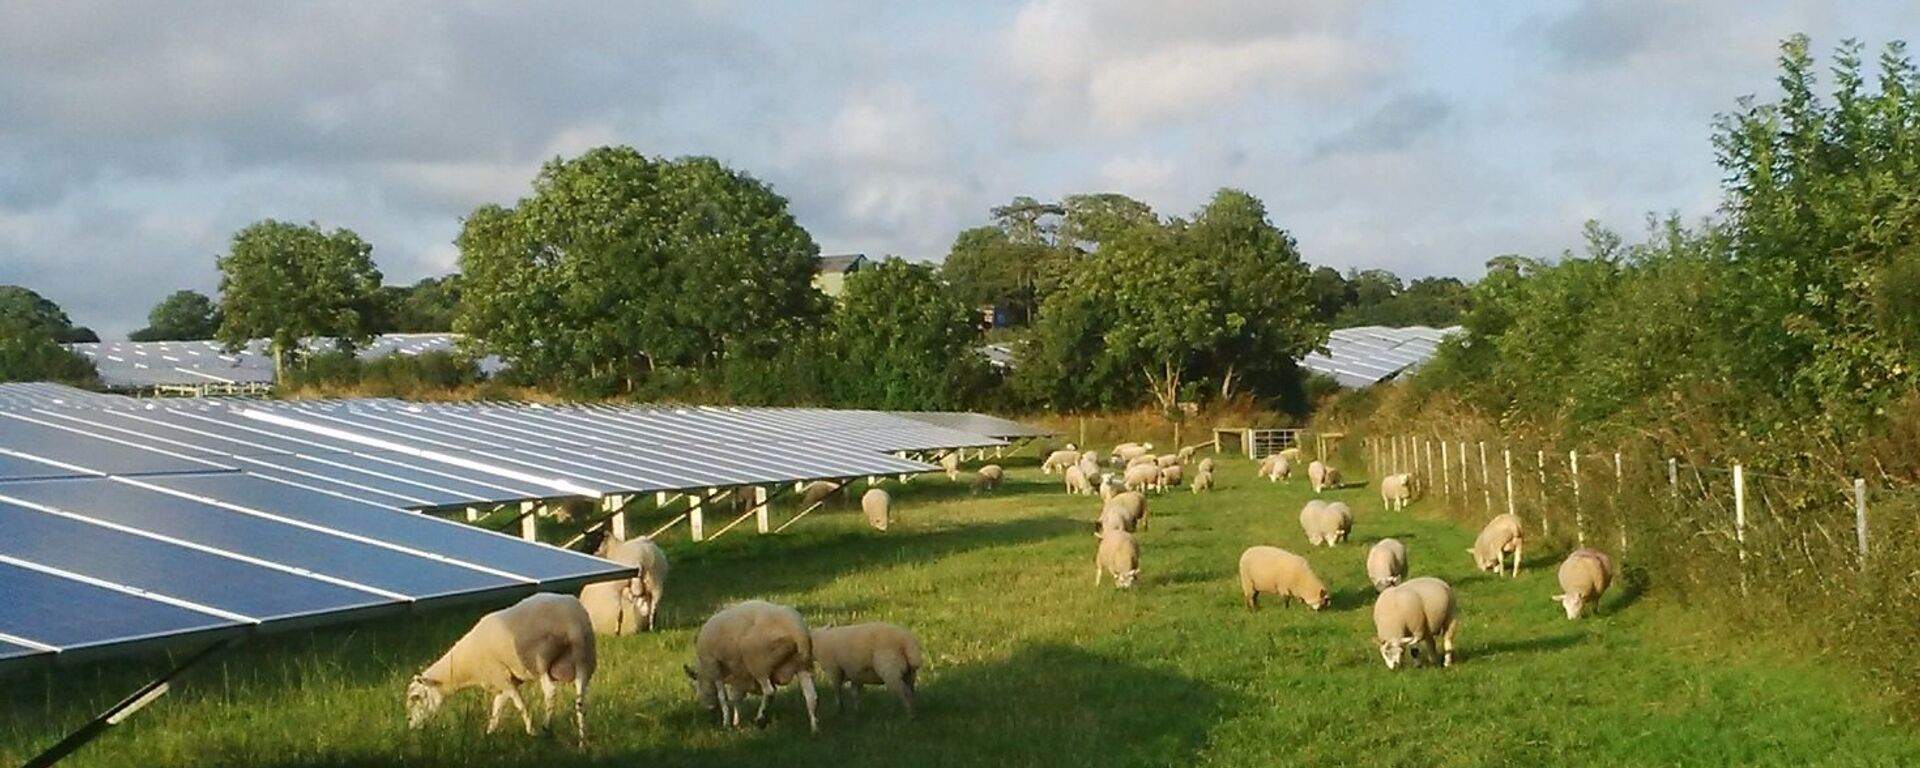 Solar farm with sheep grazing, Pembrokeshire - Sputnik International, 1920, 18.09.2018